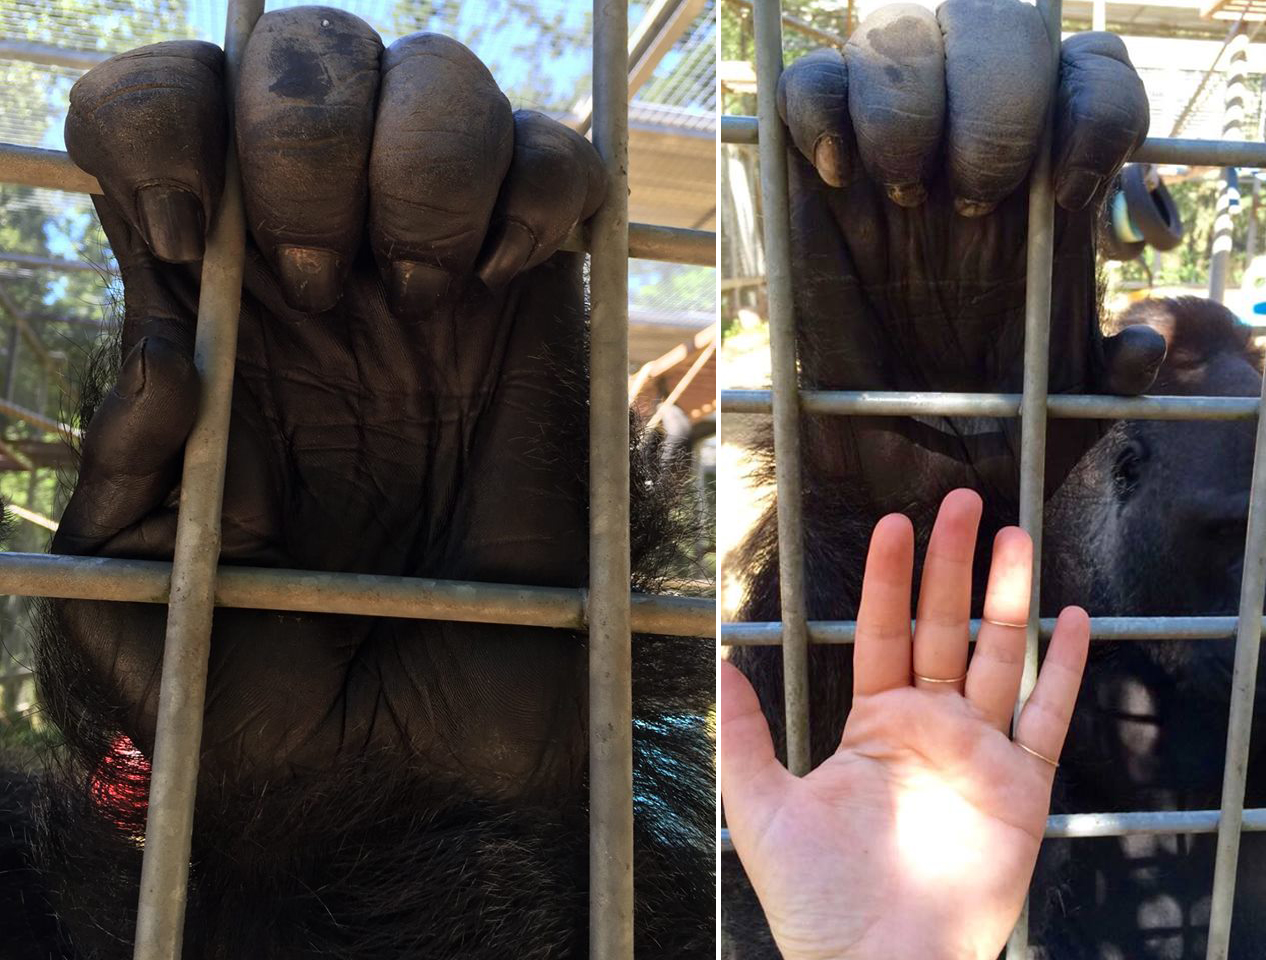 Gorilla hands up close